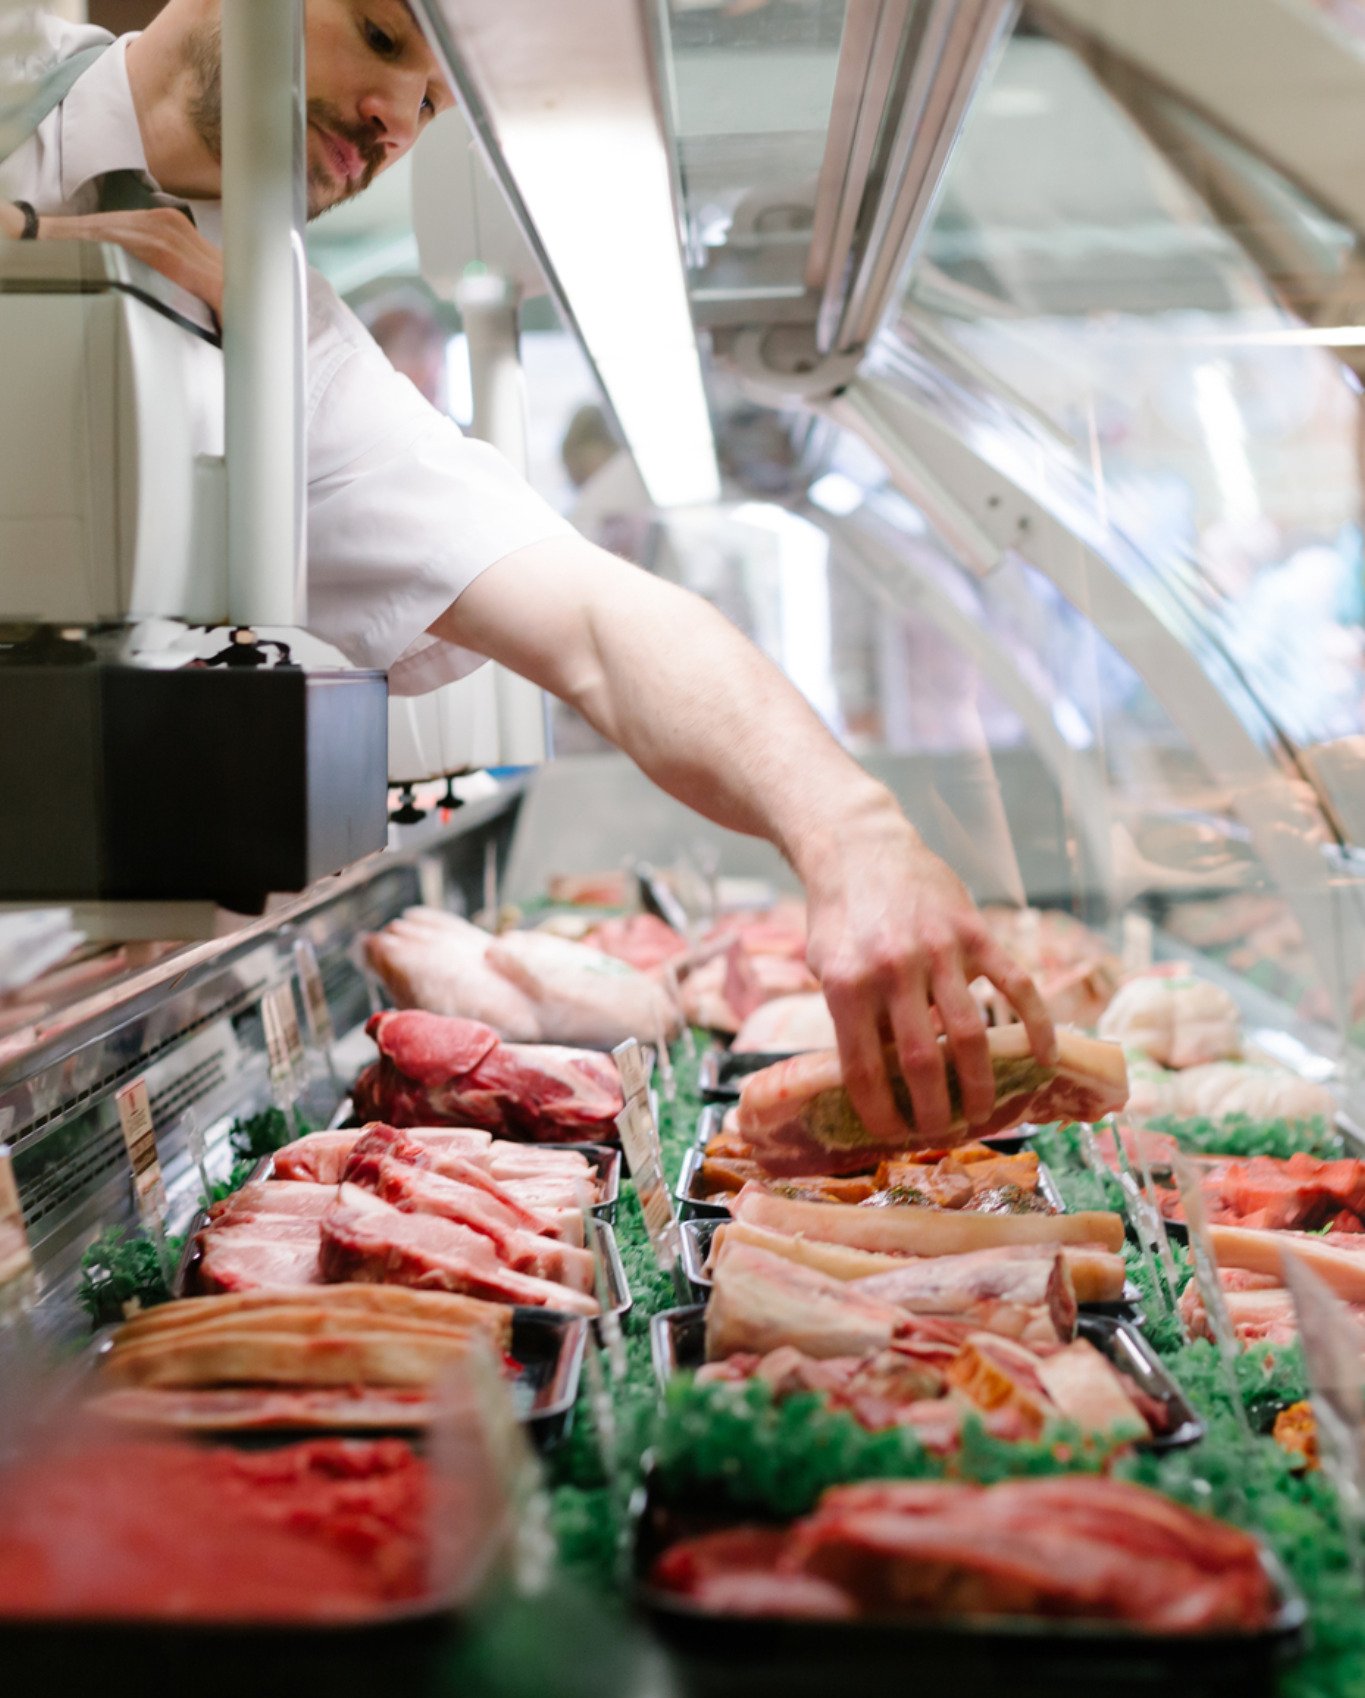 A deli worker arranges deli meats into a display case